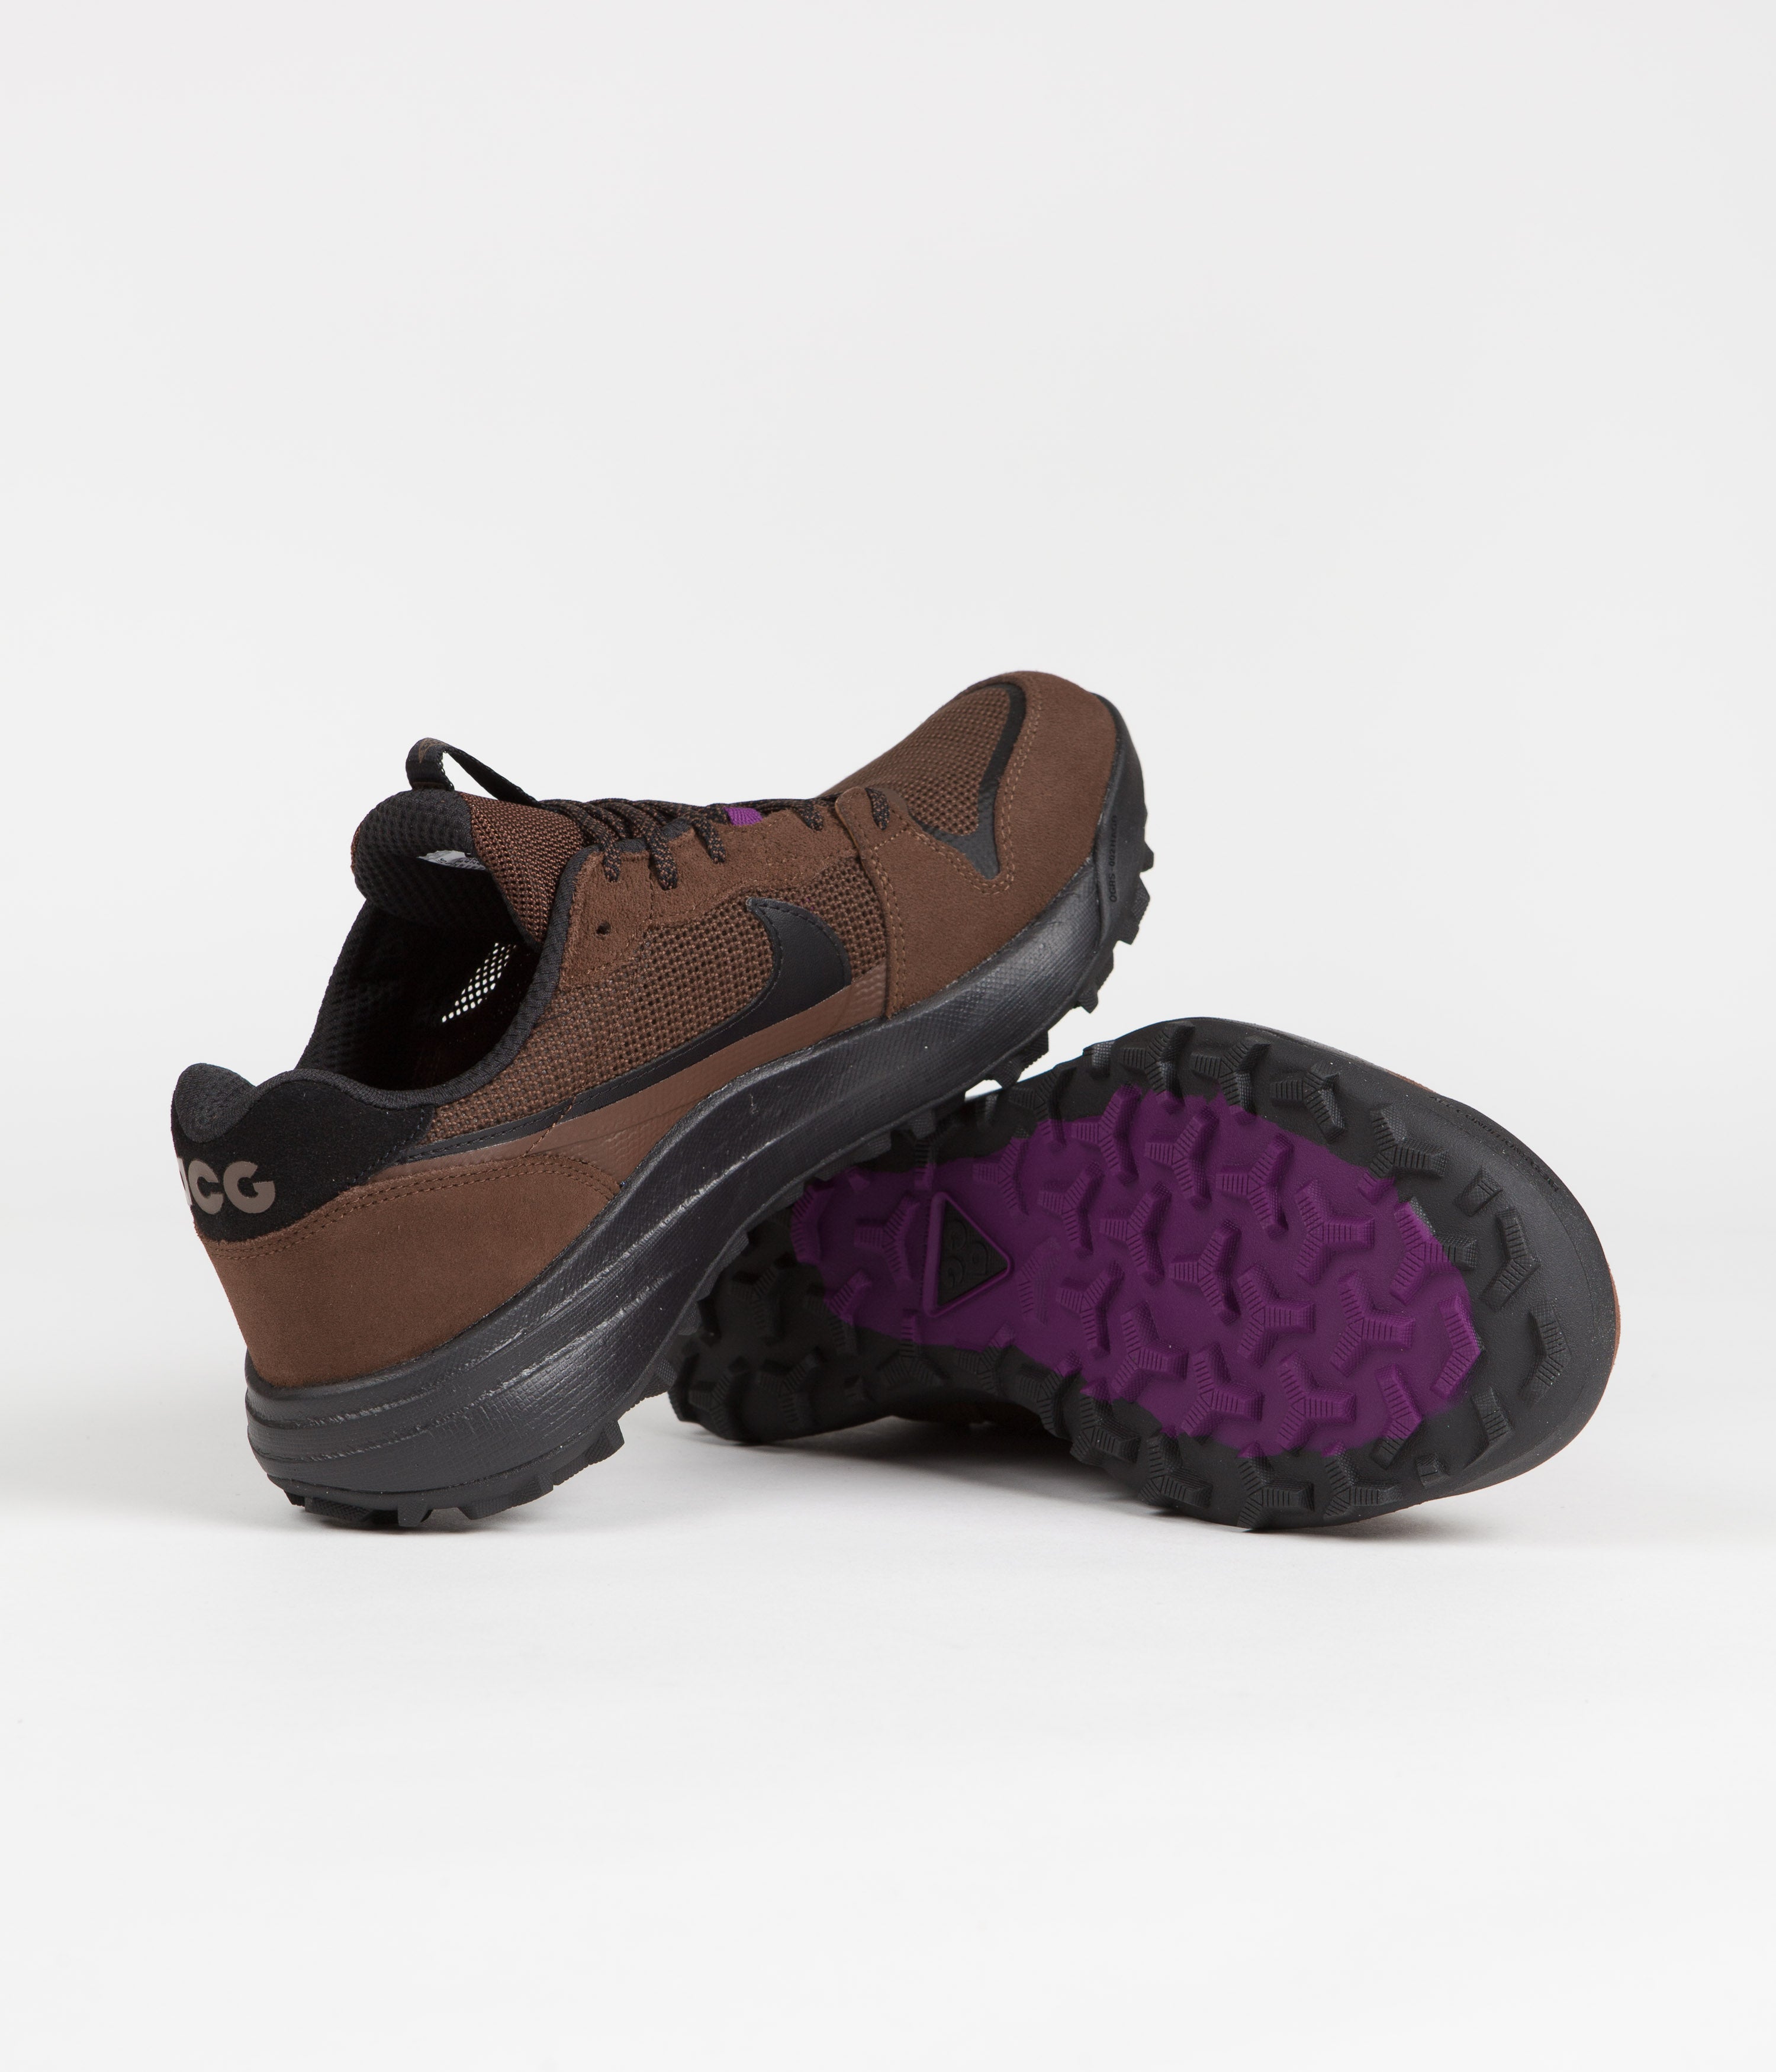 Nike ACG Lowcate Shoes - Cacao Wow / Black - Cacao Wow - Viotech | Flatspot